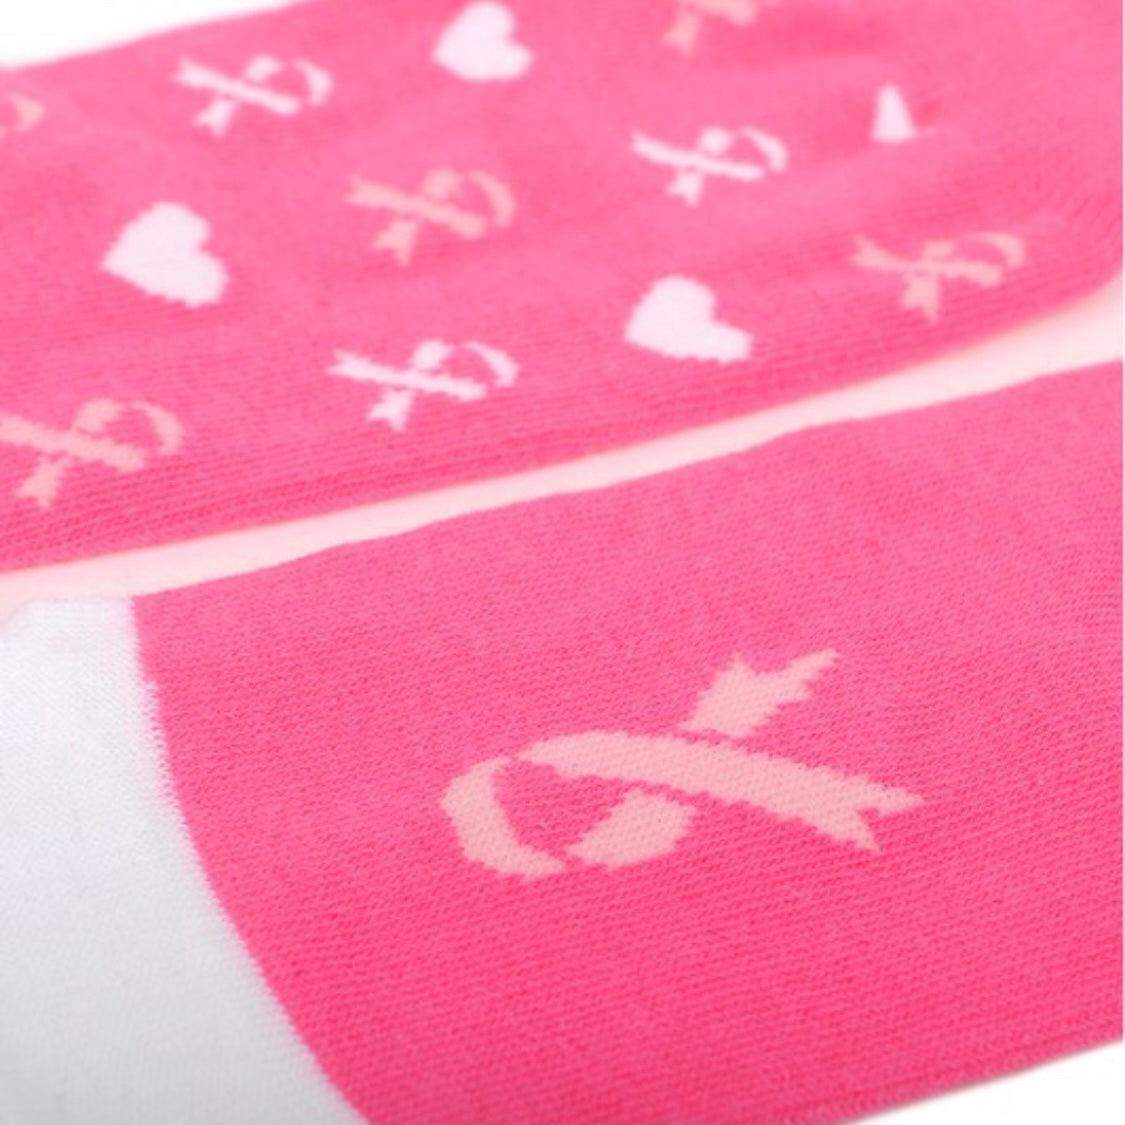 Breast Cancer Awareness Novelty Socks, Policy Handbags, Clear Bag Policy